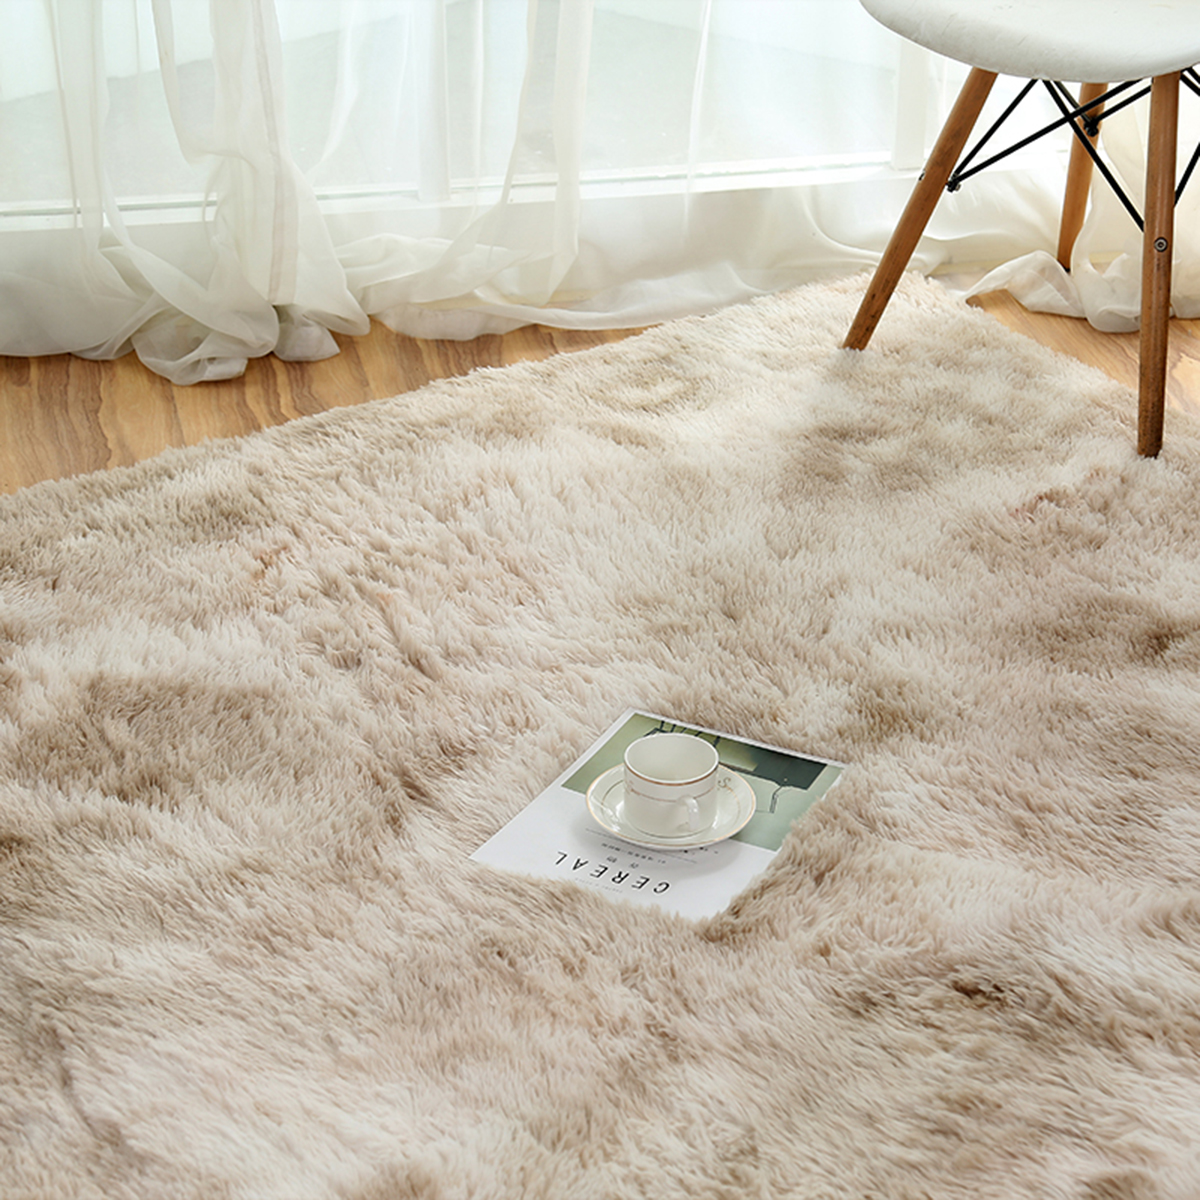 Soft Shaggy Area Rugs Fluffy Tie-Dye Floor Carpet Living Room Bedroom Large Rugs